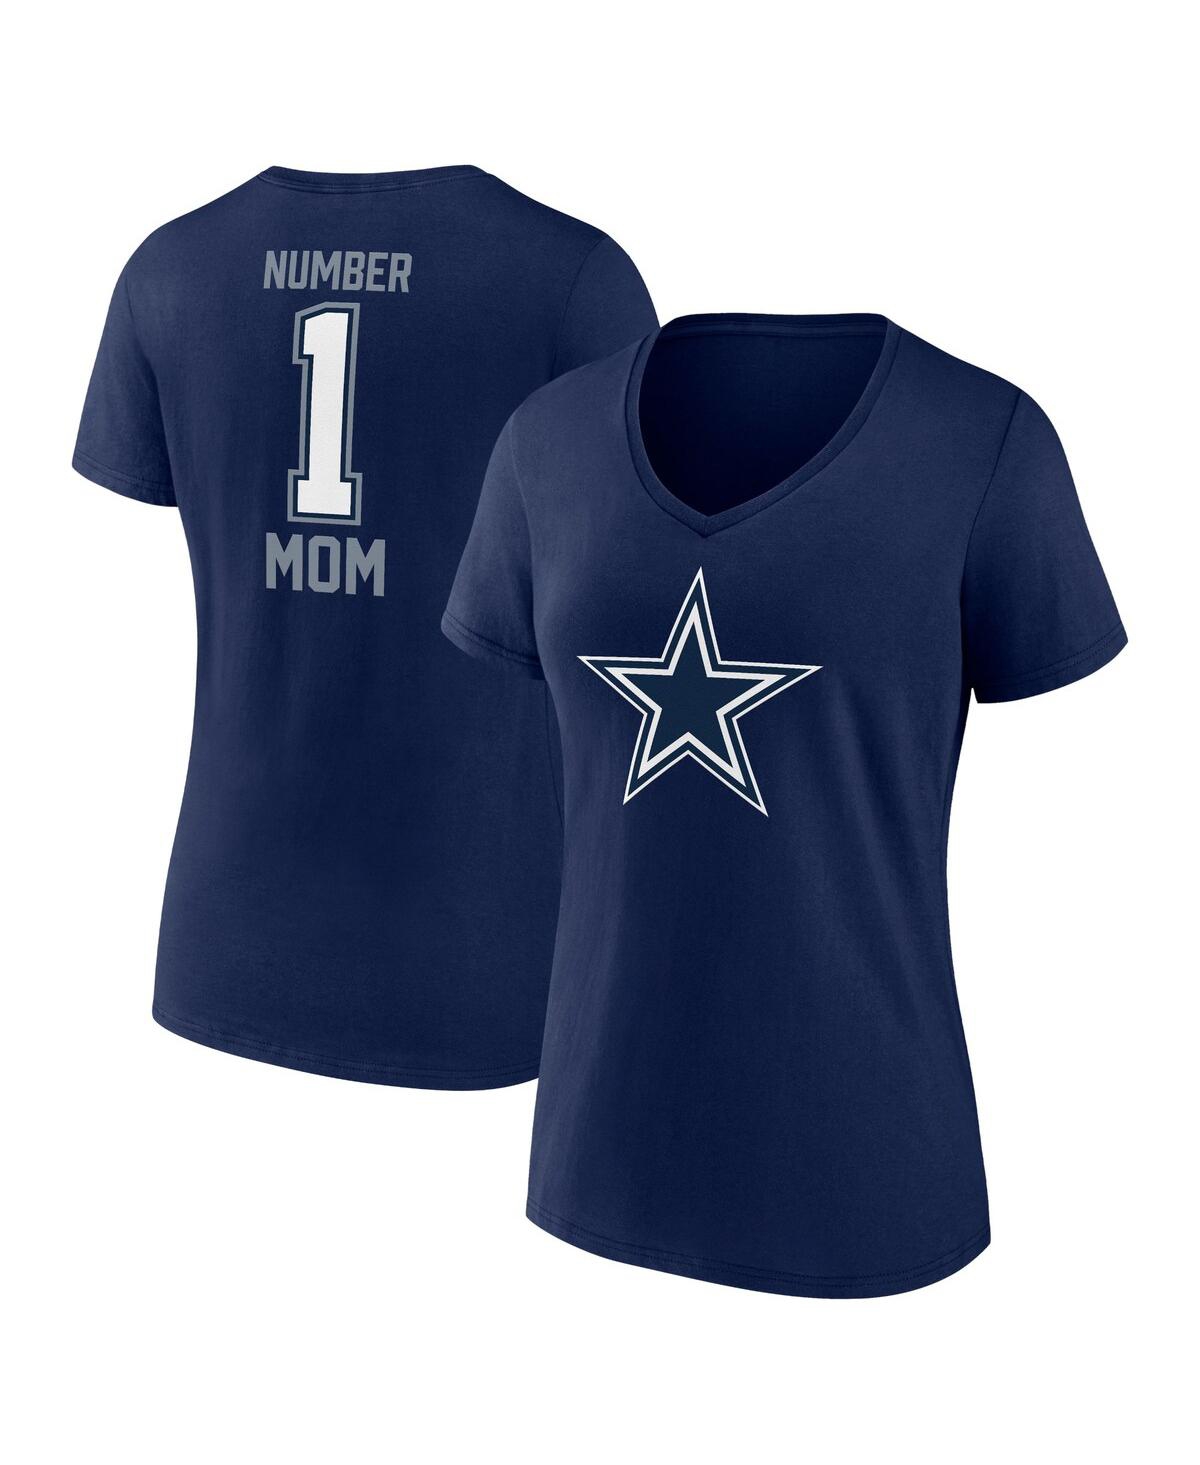 Shop Fanatics Women's  Navy Dallas Cowboys Mother's Day V-neck T-shirt